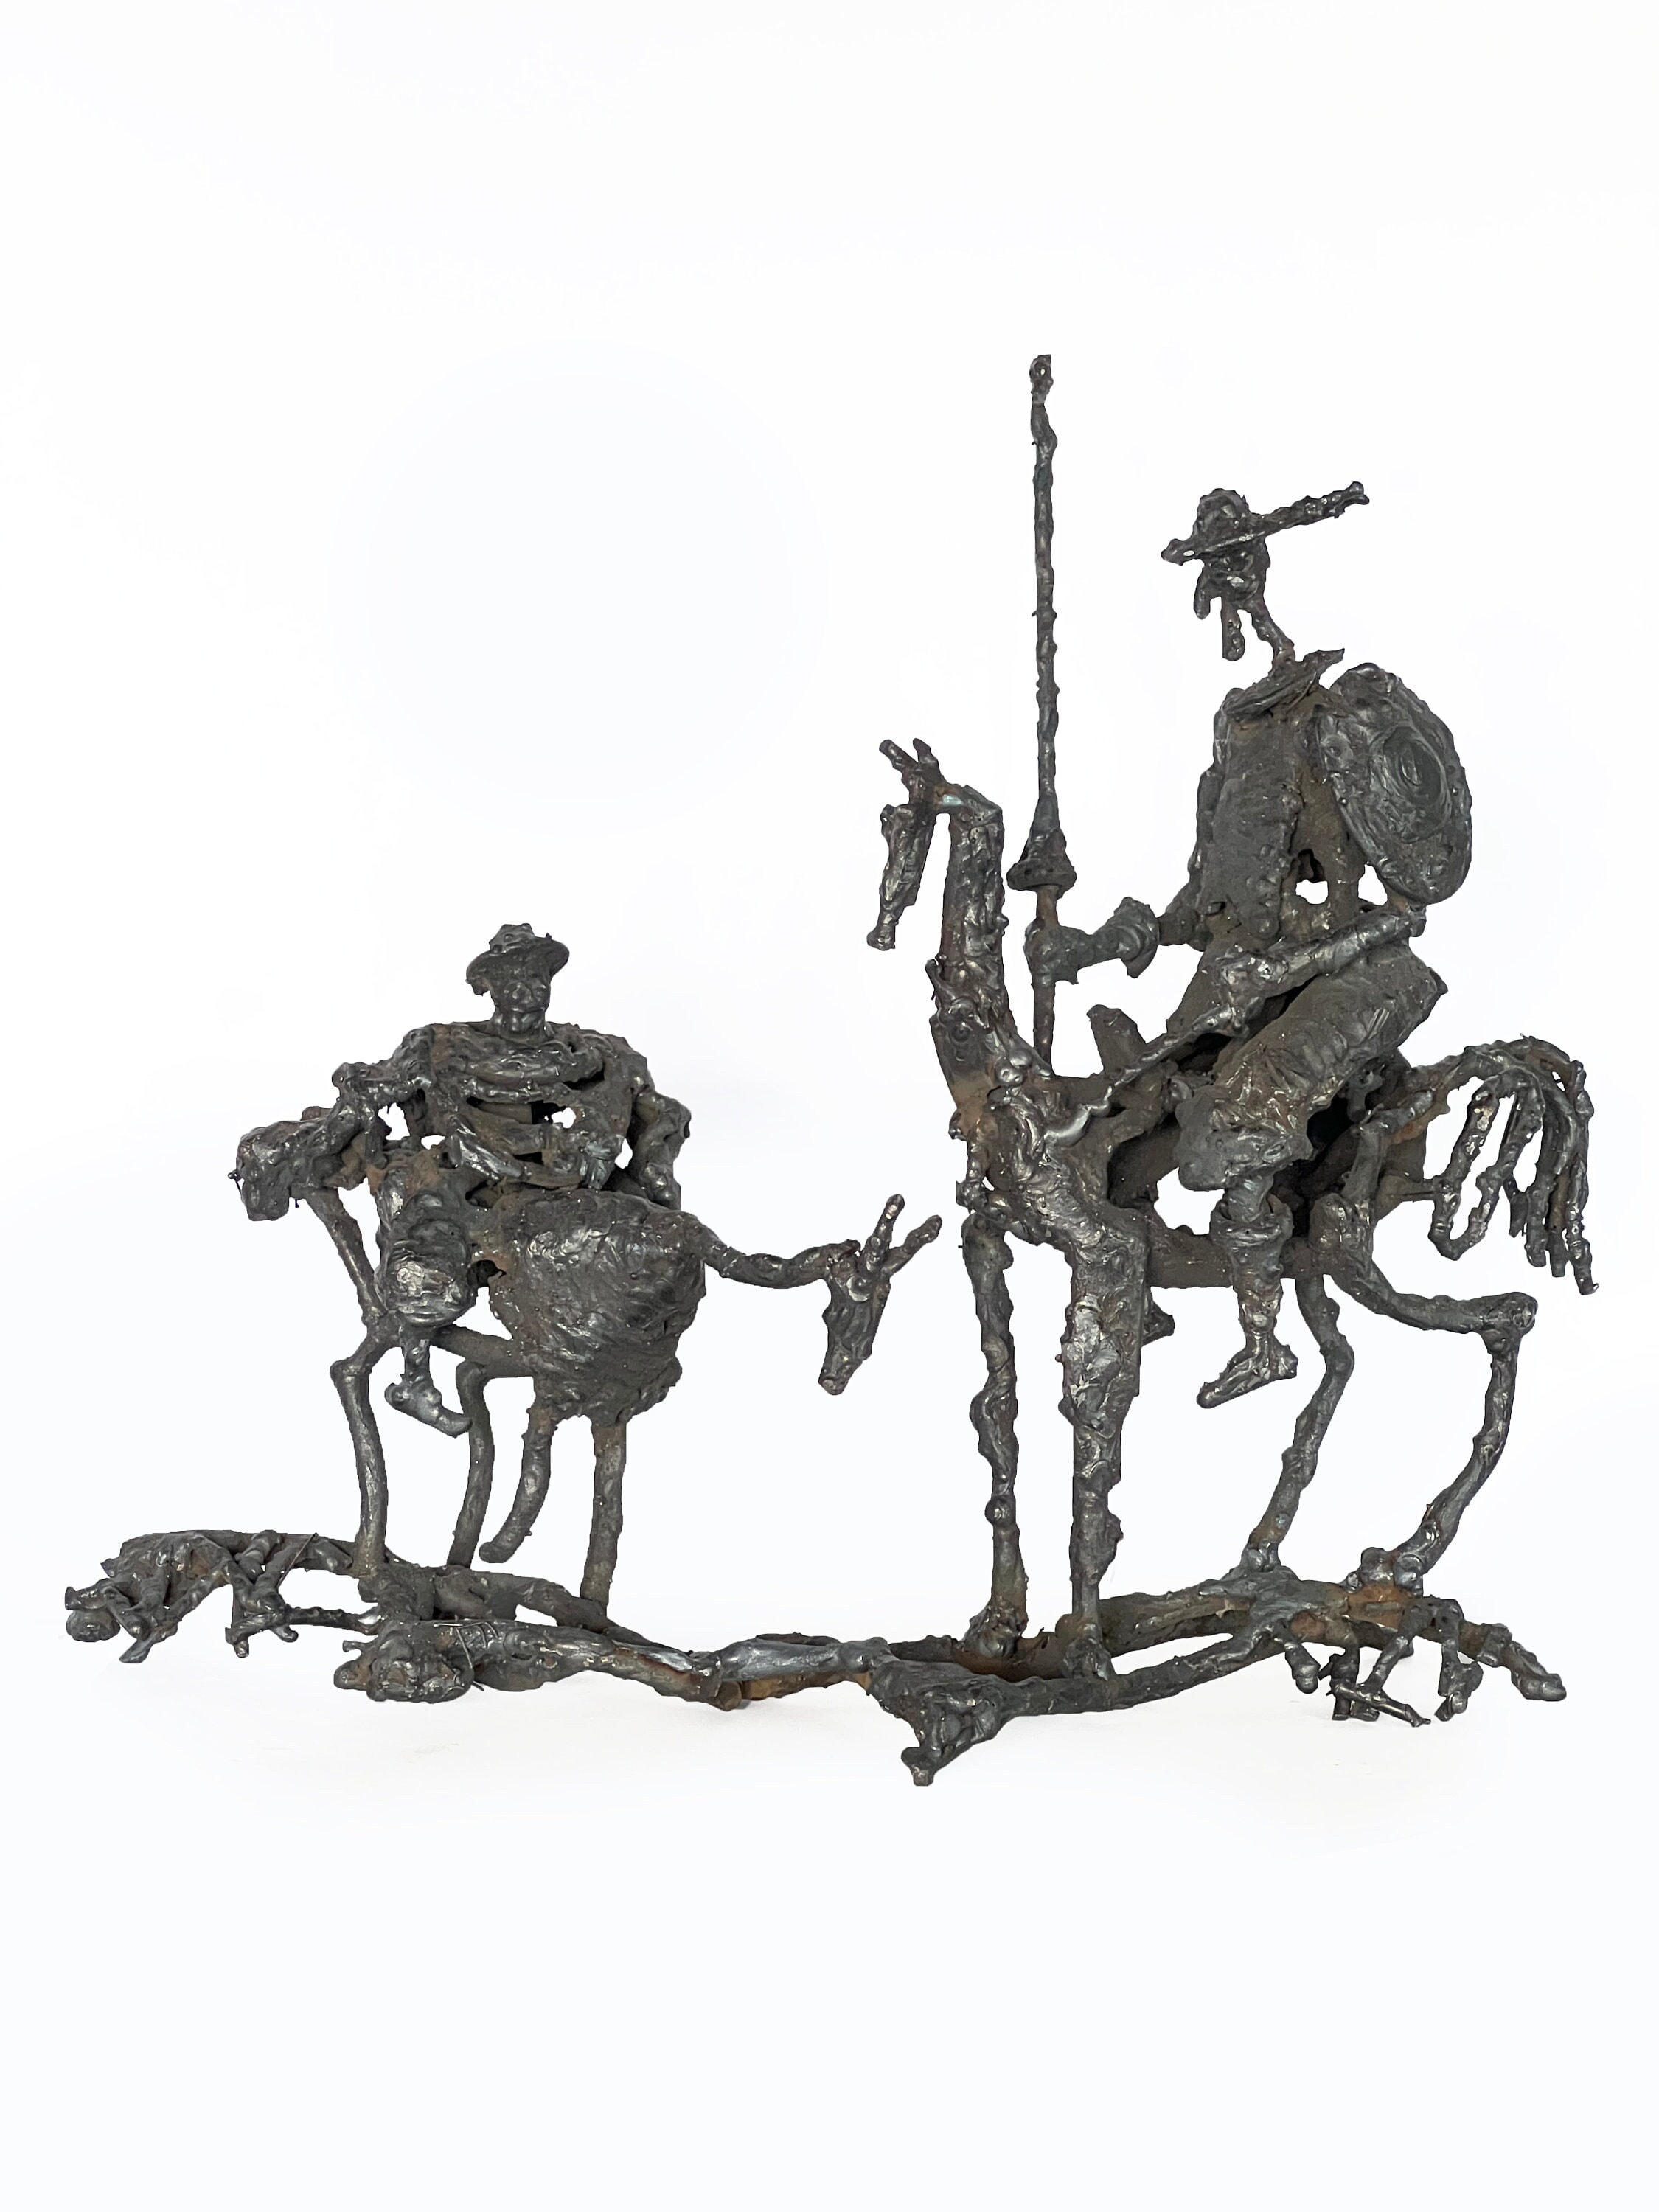 Buy Bullfight Metal Sculpture on Picasso Sketch Online in India 